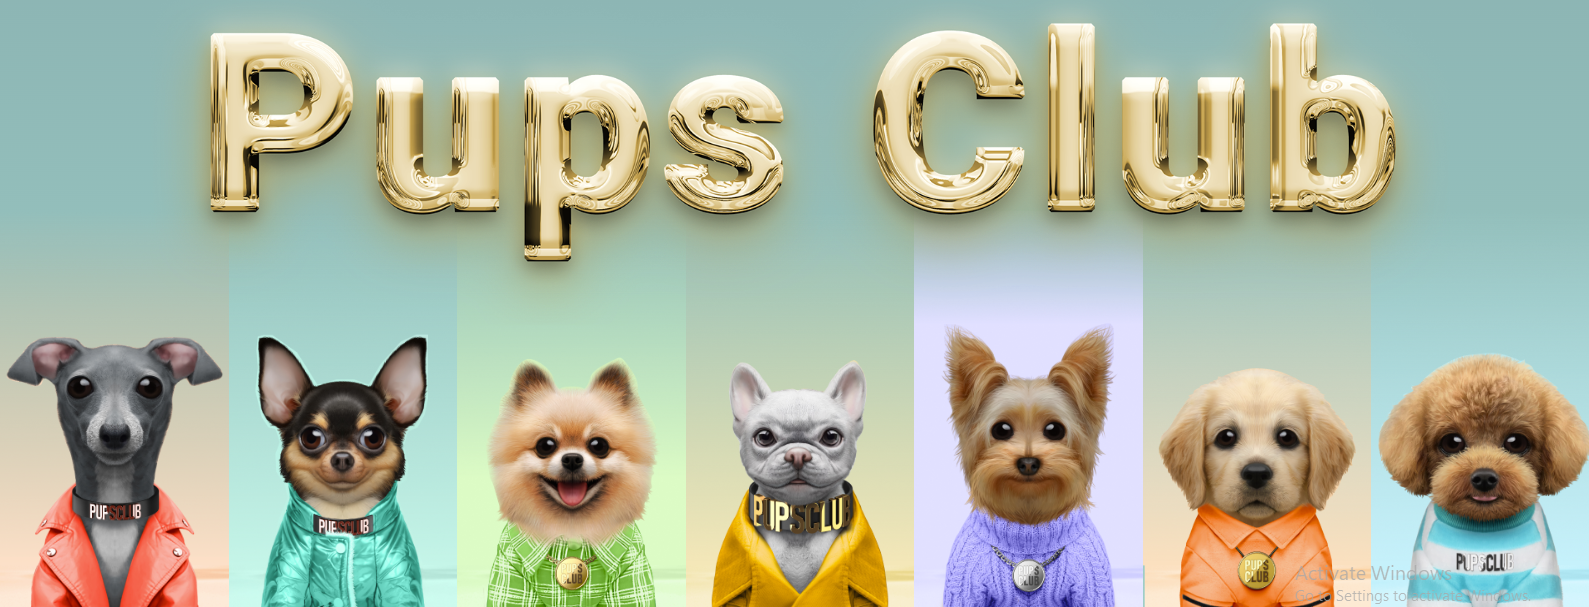 pups club